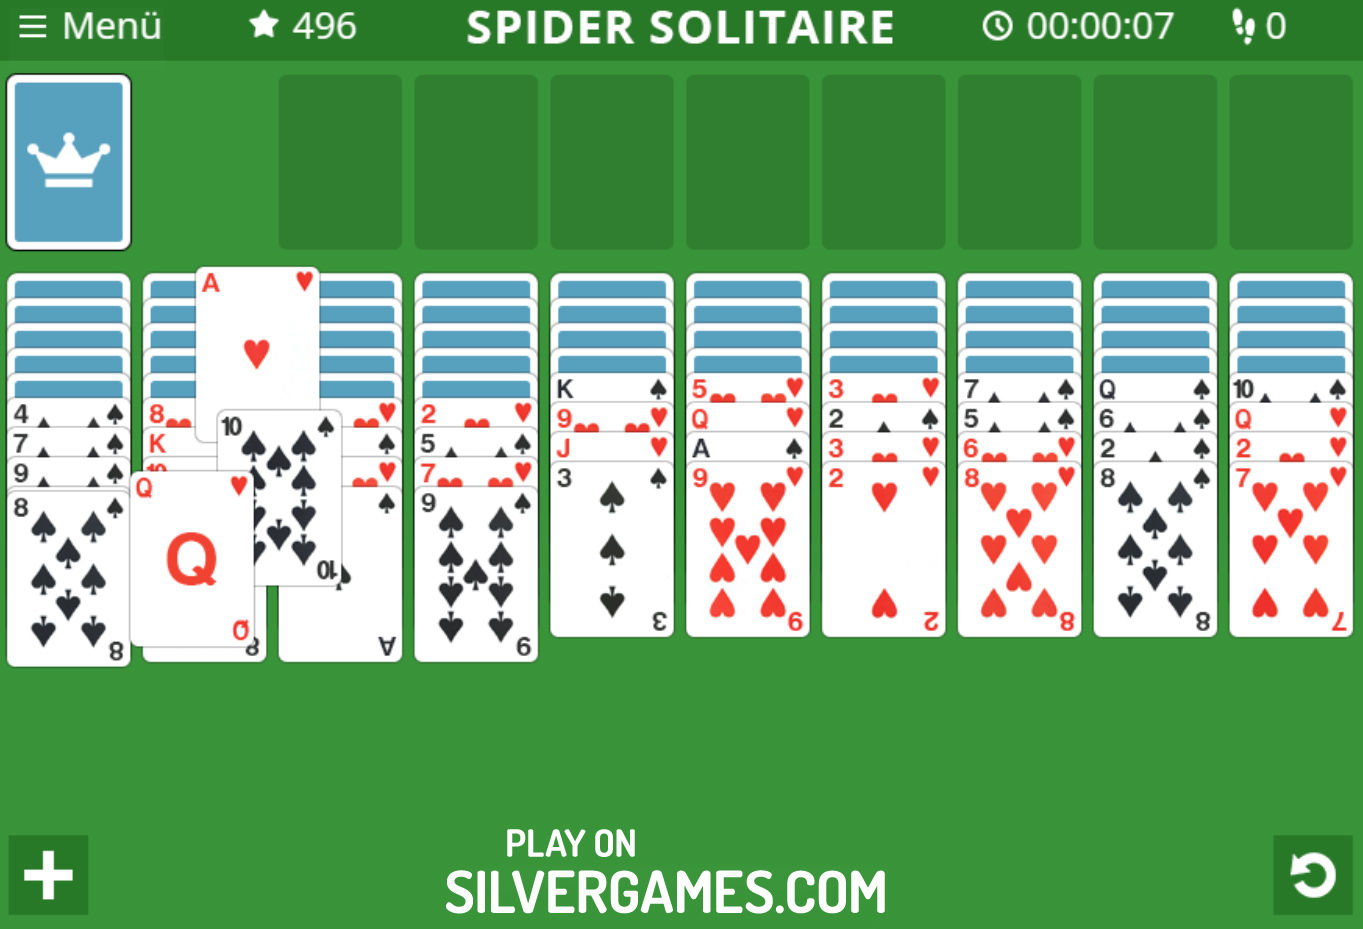 Big Spider Solitaire - Play Online